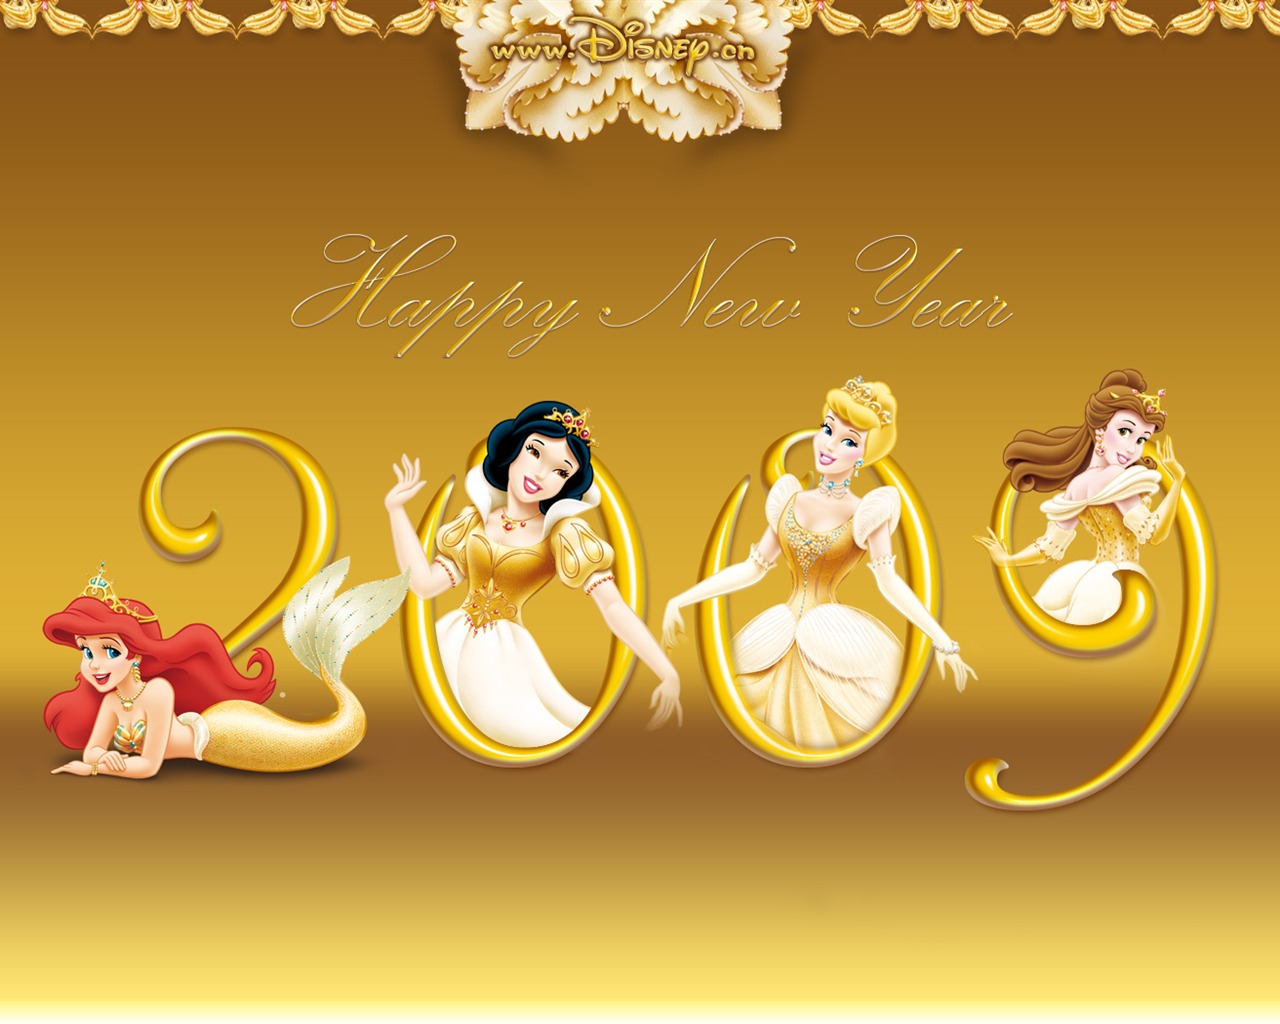 Princess Disney cartoon wallpaper (2) #8 - 1280x1024